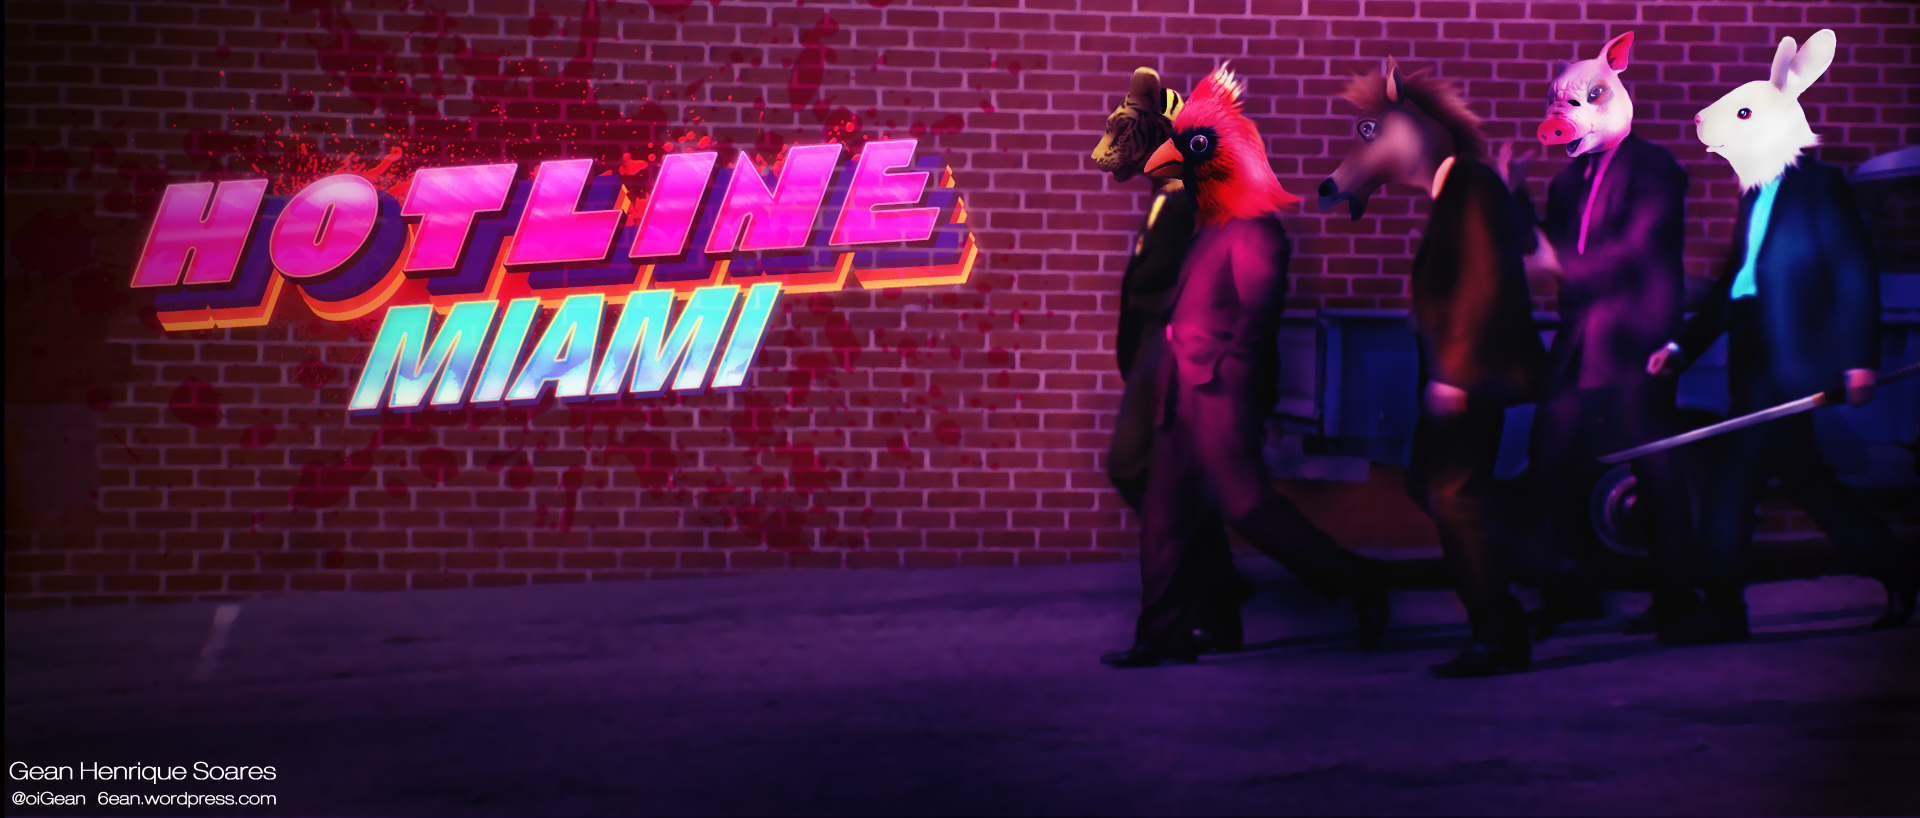 Hotline Miami Reservoir Dogs By Geanhenriquesoares